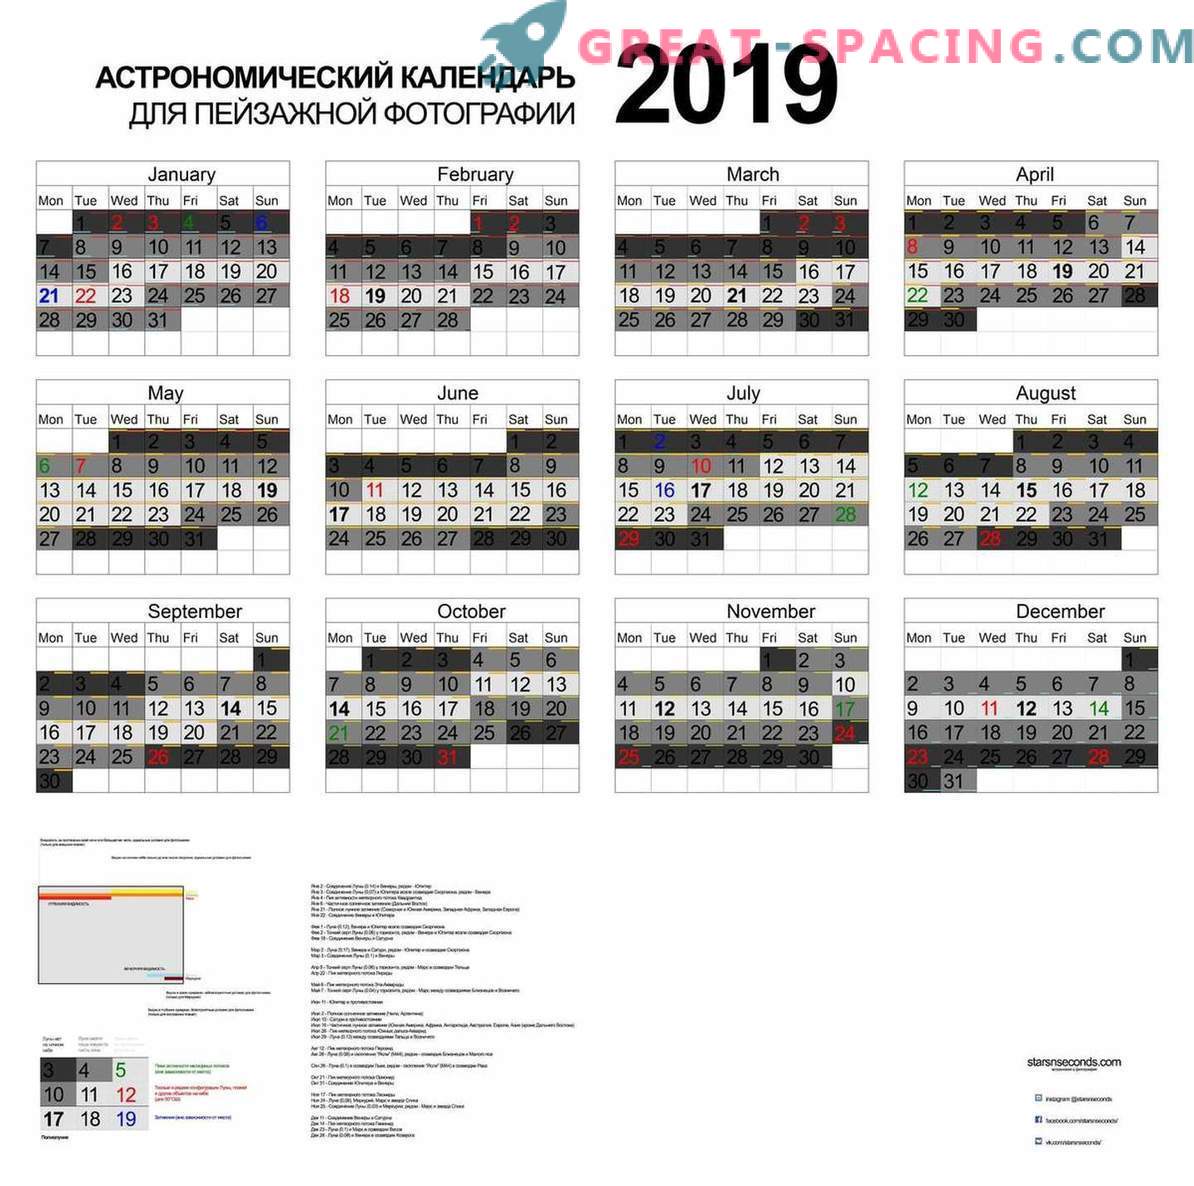 Astronomischer Kalender 2019